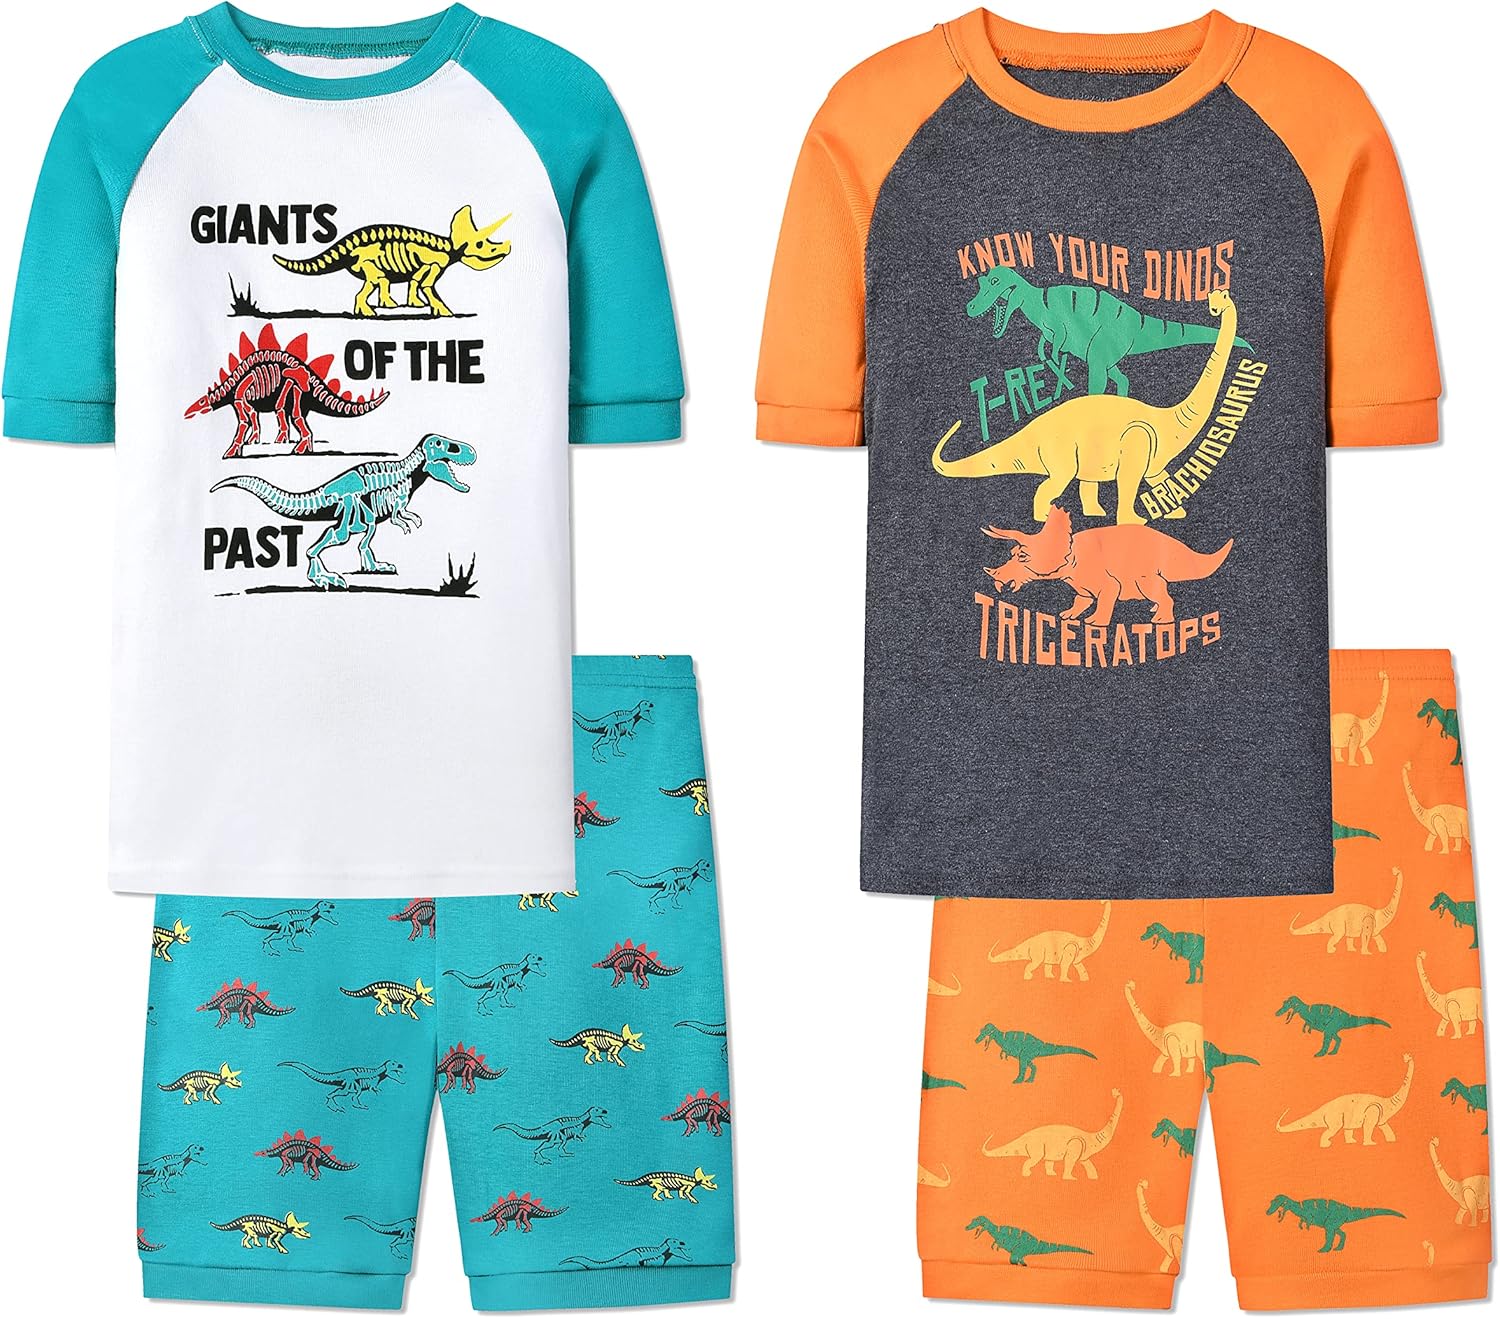 Joyond Boys Pajamas Set, Sleepwear Set with Short sleeve T-shirt & Shorts, for Boy Summer Pjs, Made of Cotton